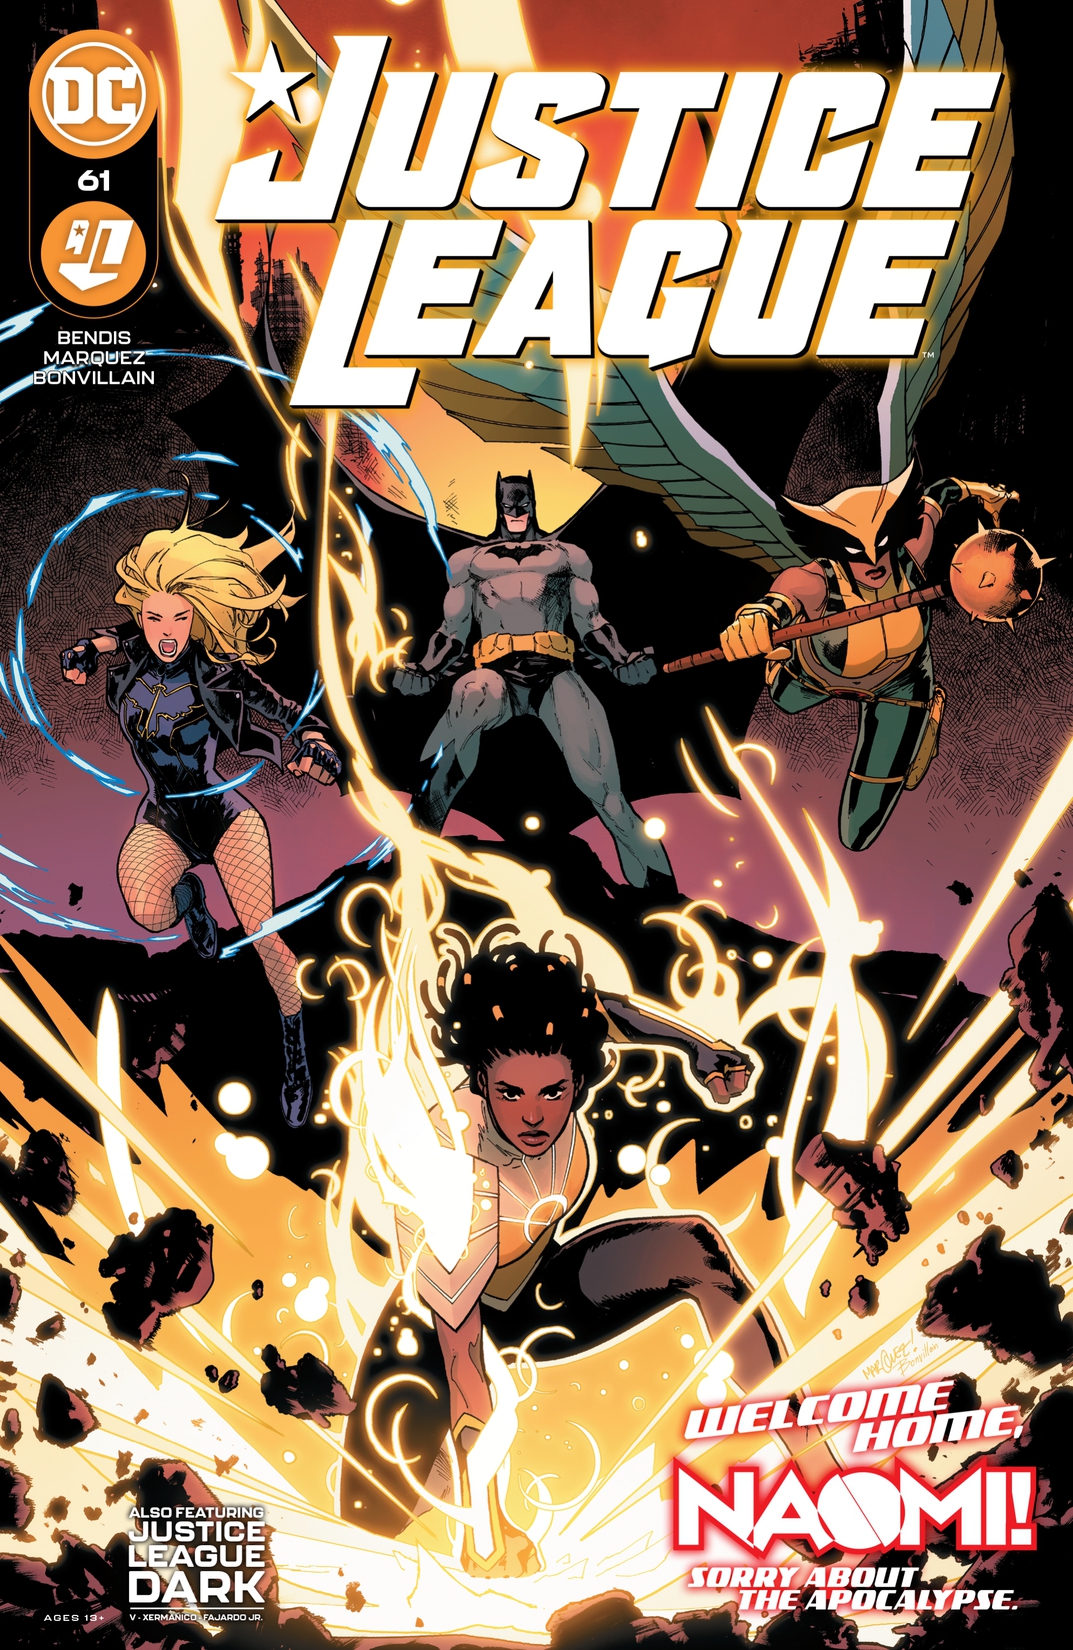 Justice League (2018-) #61 preview images